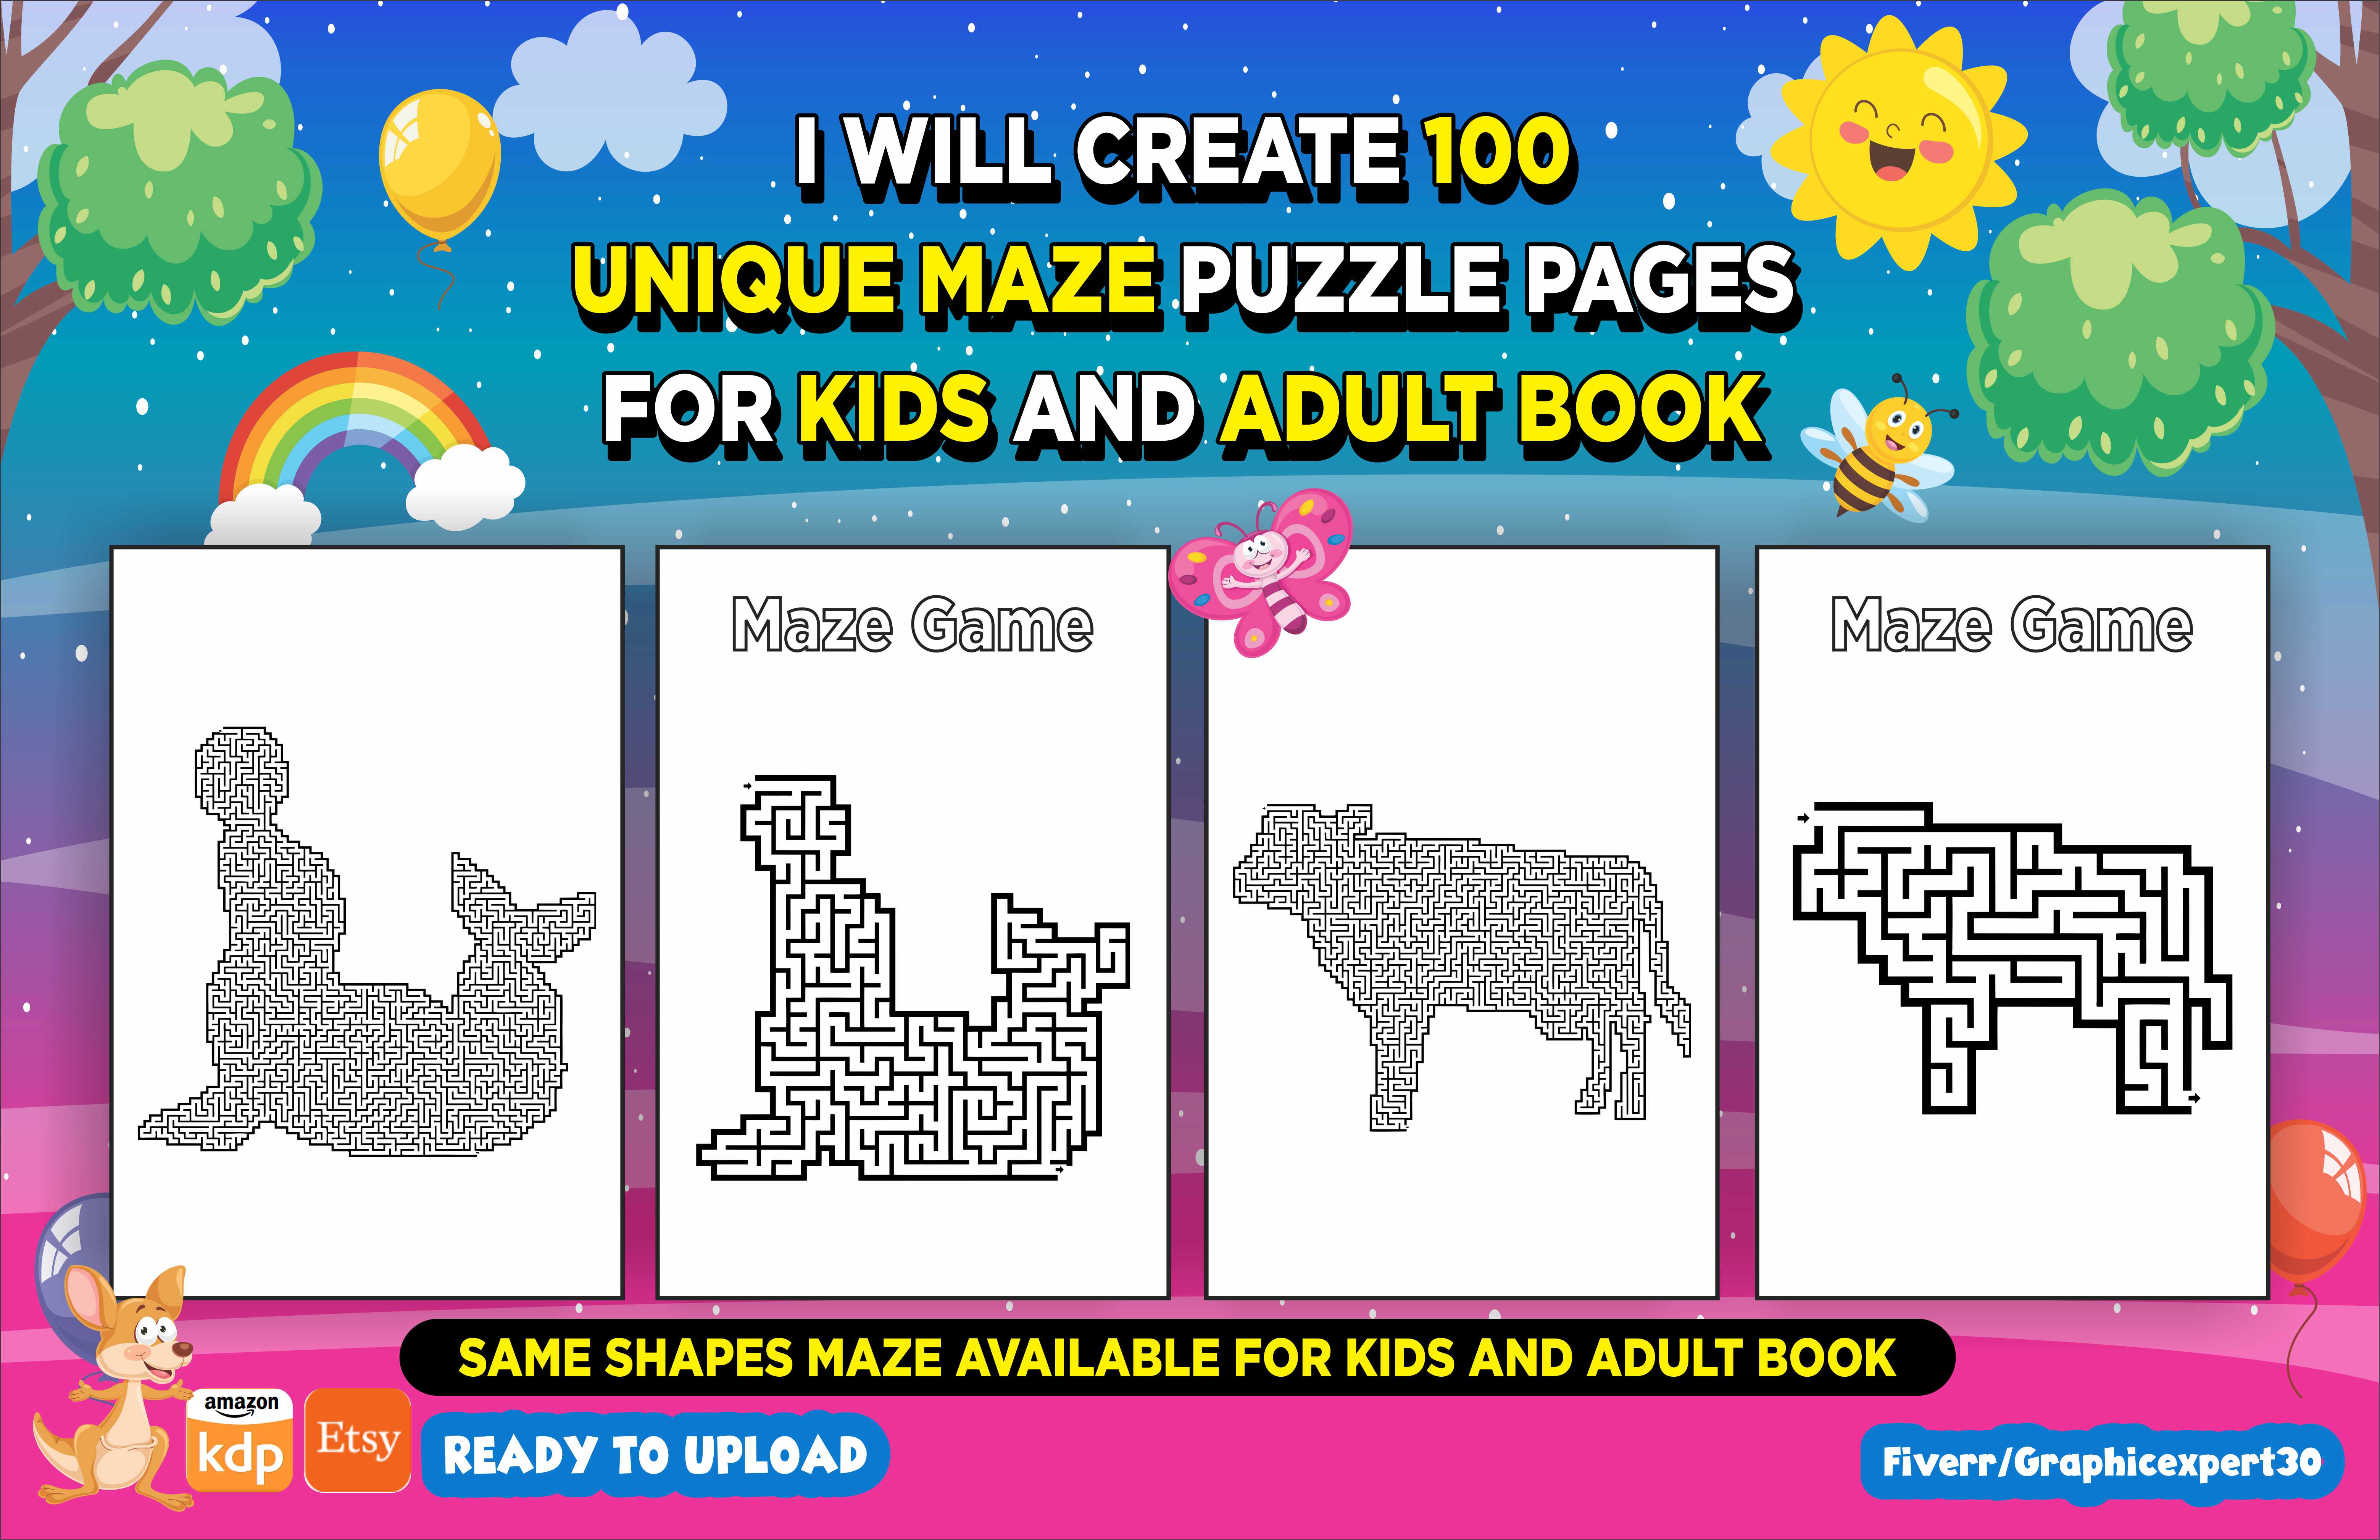 Dinosaur Sudoku Enfants 8-10 Ans : I Avec Solutions I 100 Puzzles